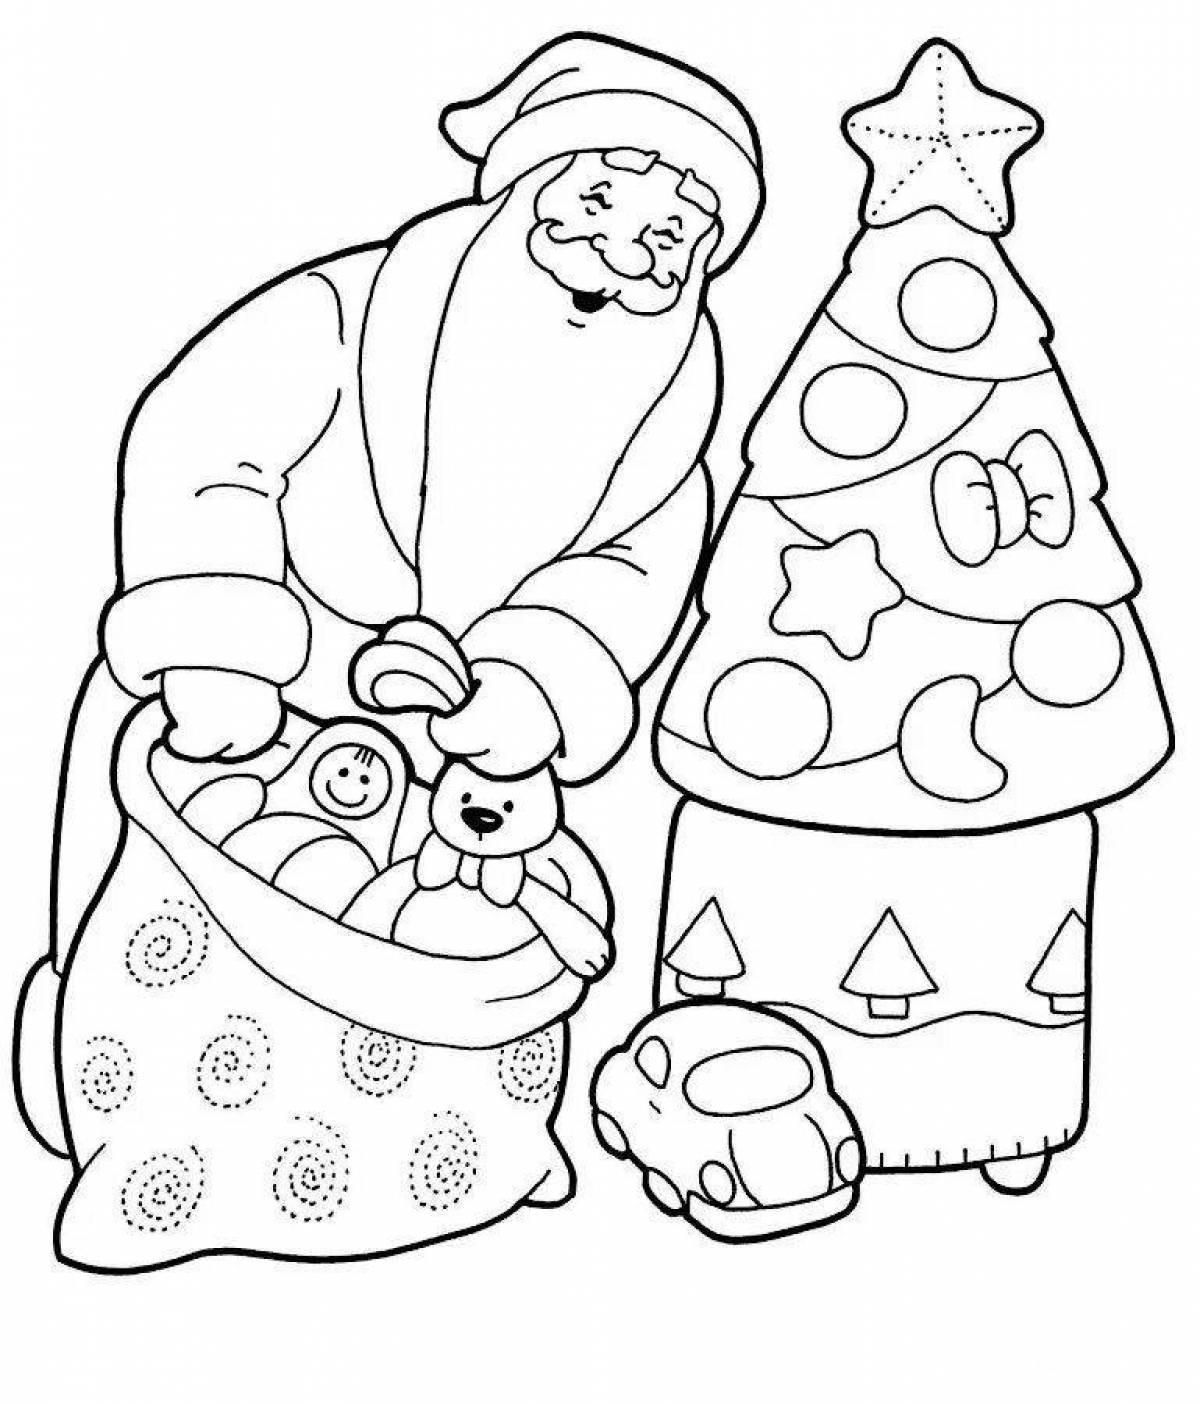 Cute santa claus with bag coloring book